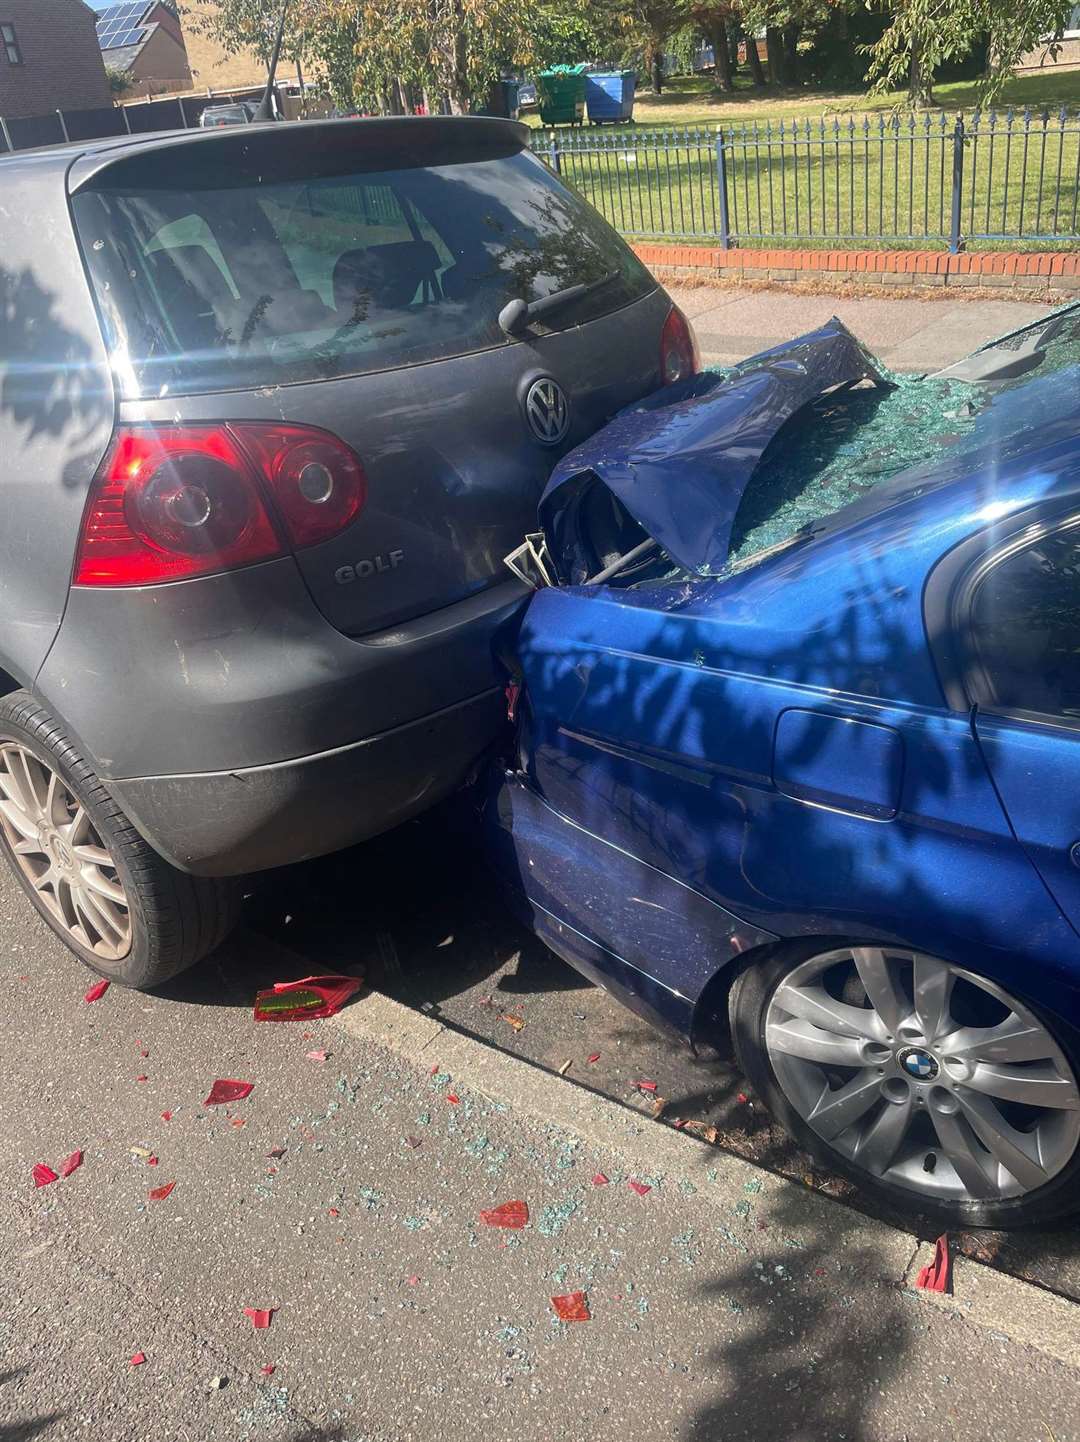 A blue BMW and silver Volkswagen golf were badly damaged